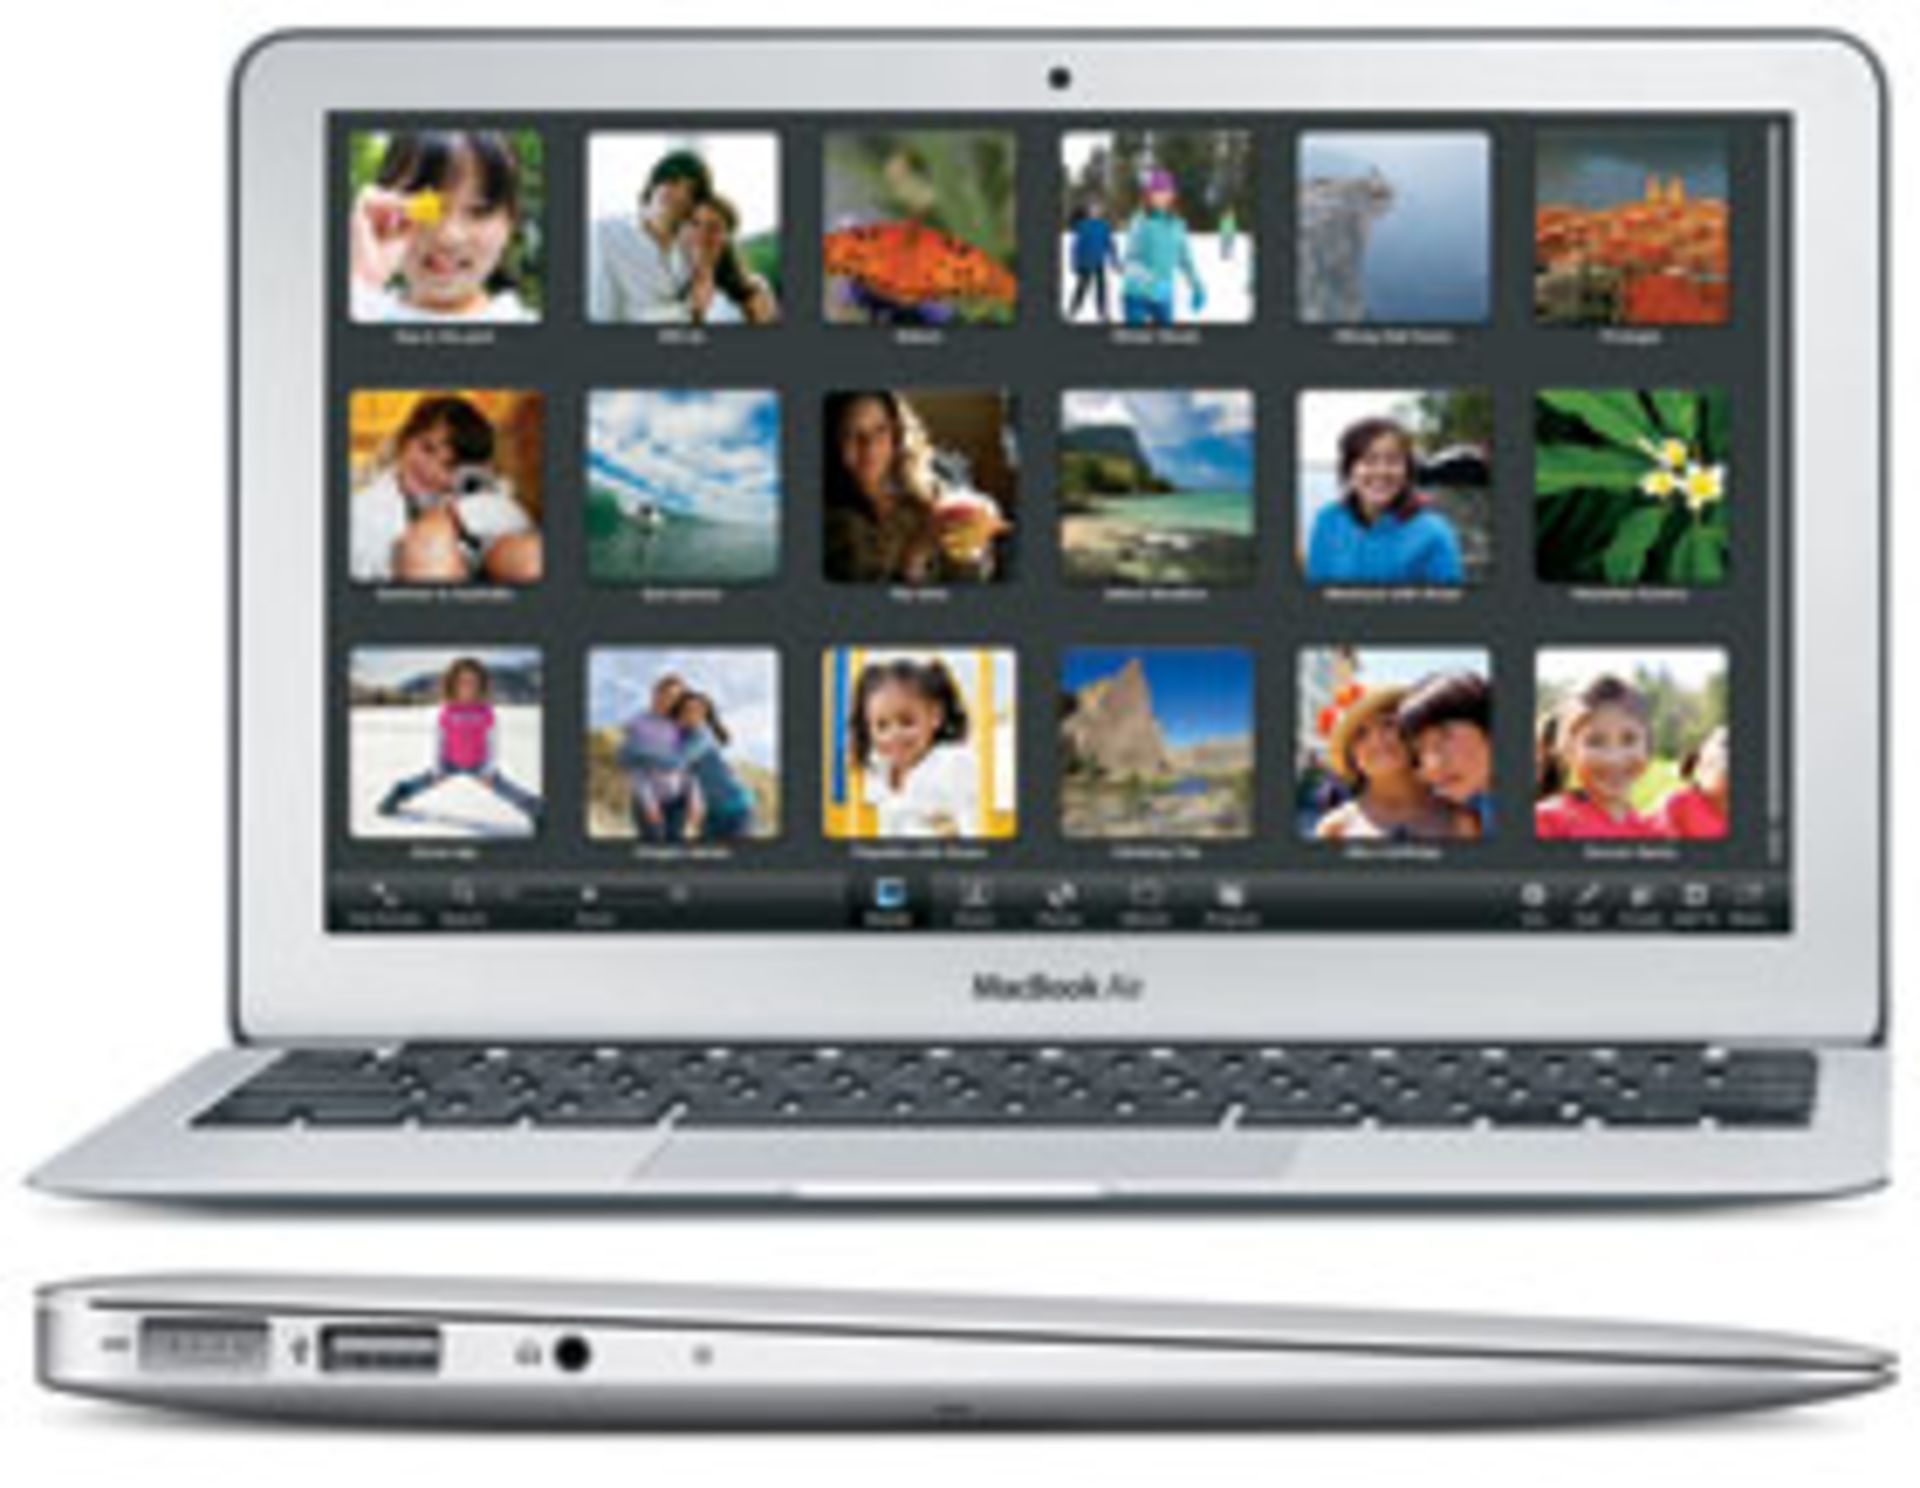 V Grade B Macbook Air 11.6 Inch Core 2 Duo - 64GB SSD - A1370 - Image 2 of 2